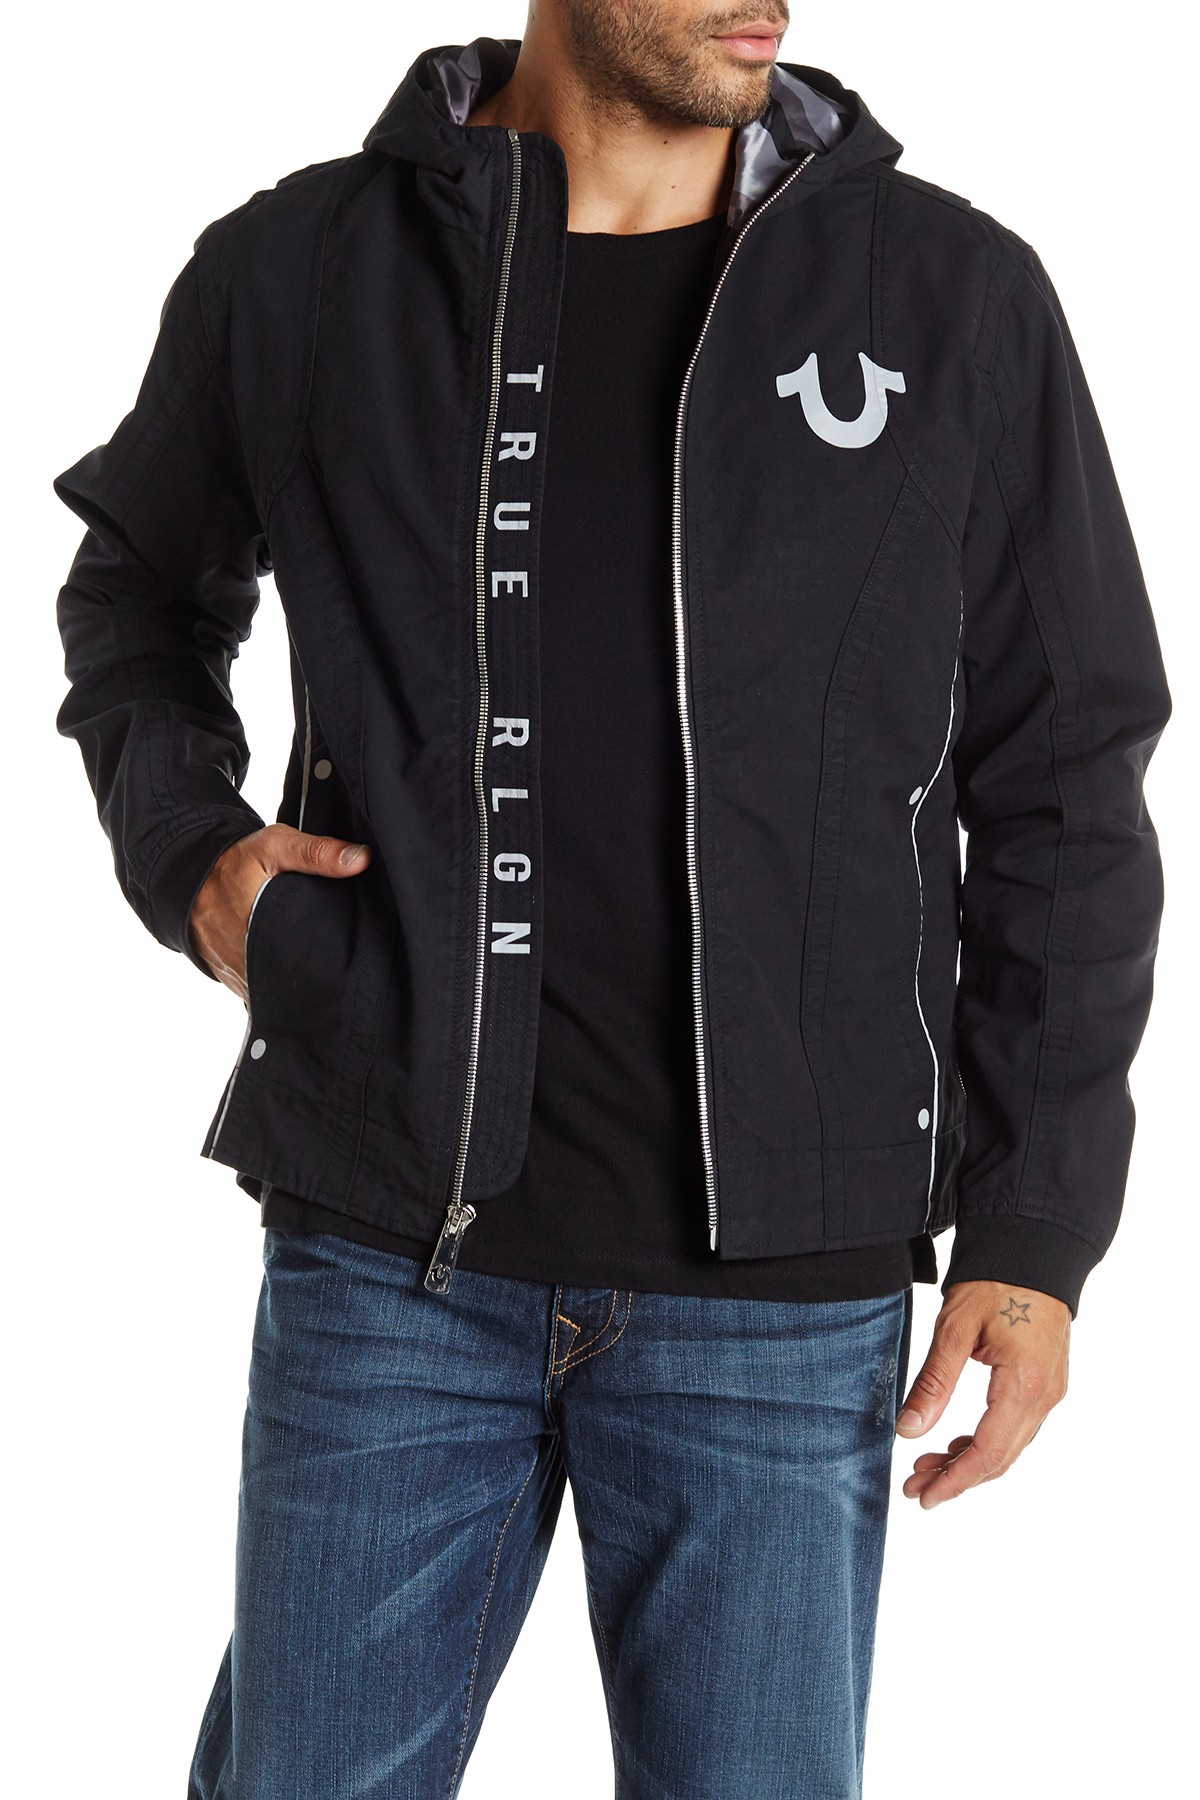 True religion Reflective Moto Jacket in Black for Men (JET BLACK